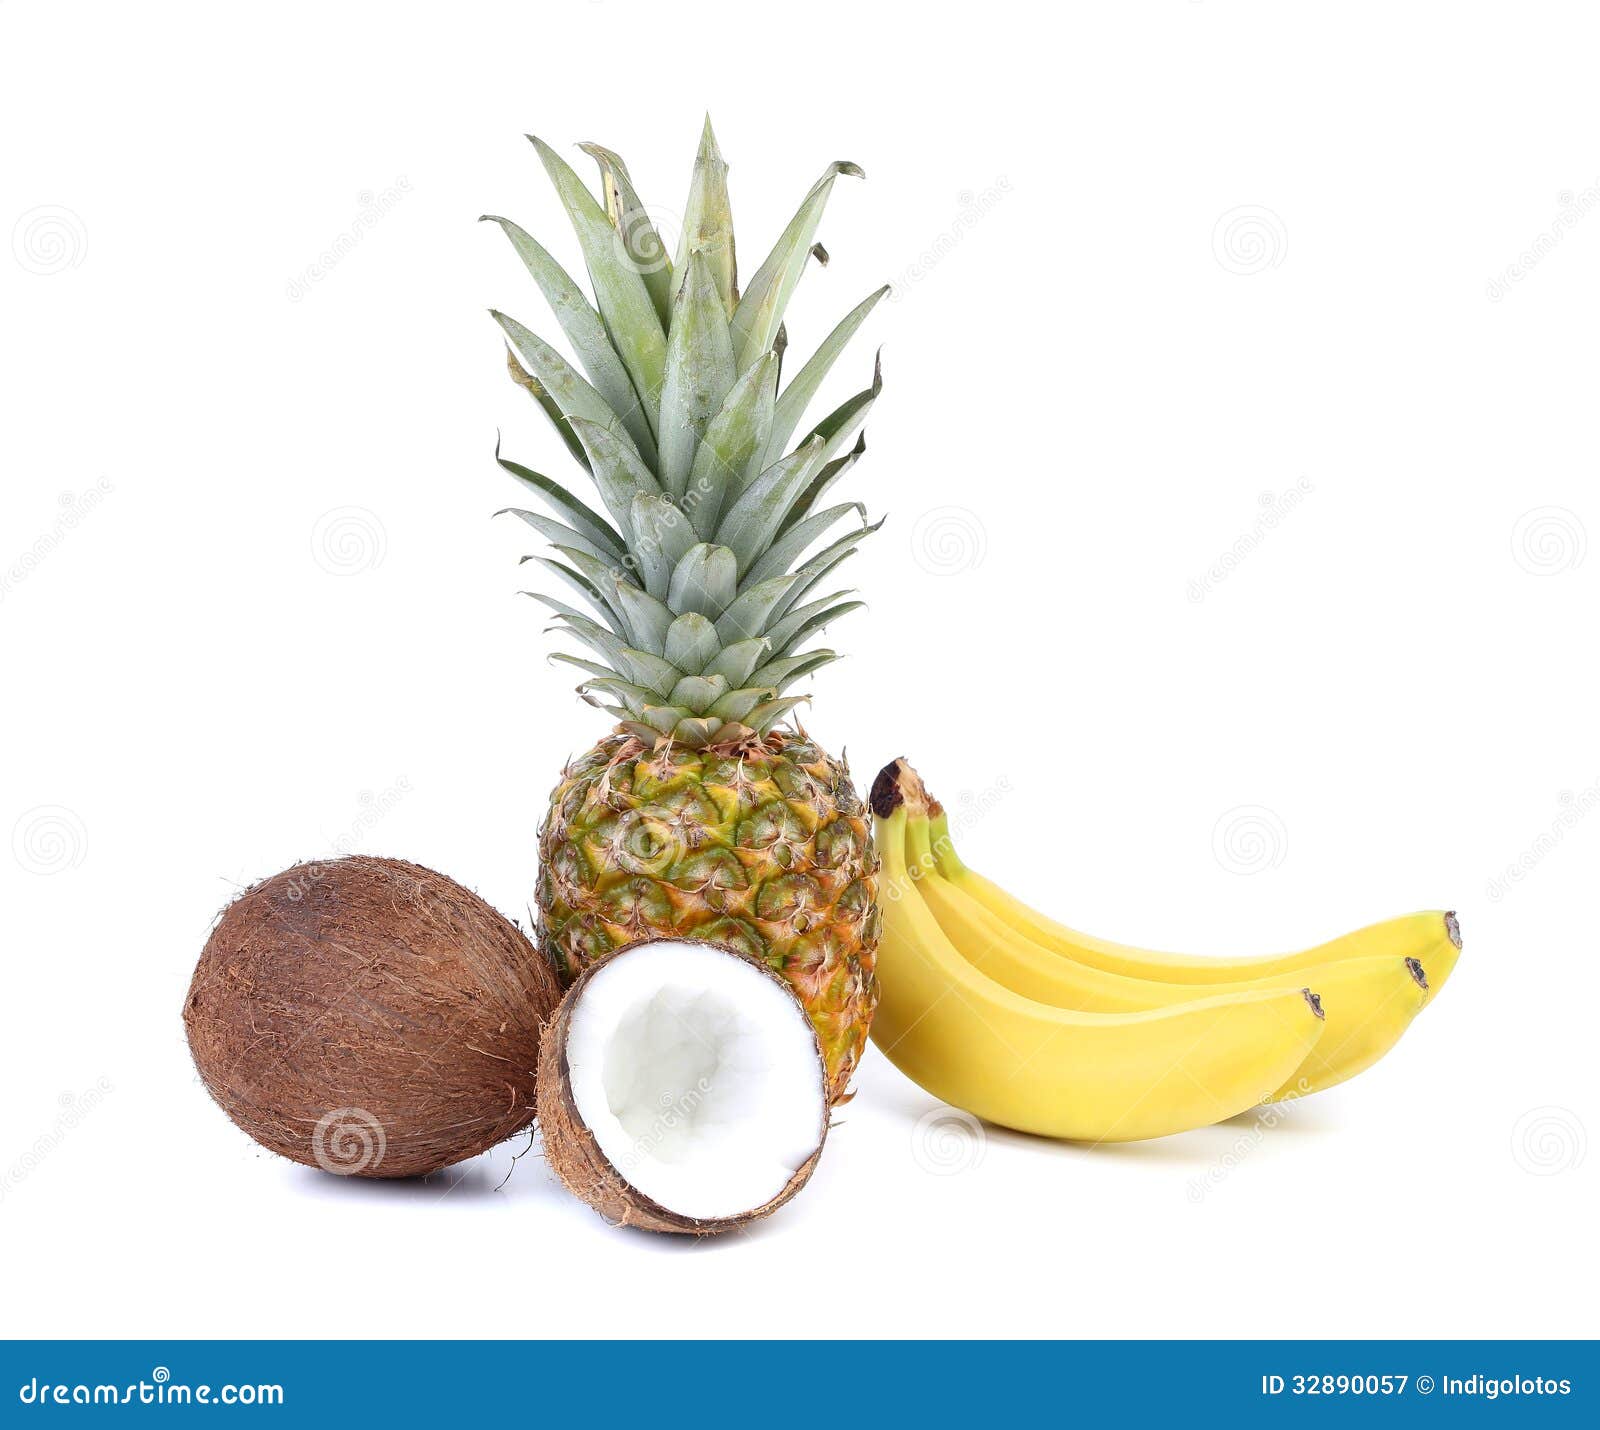 https://thumbs.dreamstime.com/z/coconut-banana-pineapple-isolated-white-background-32890057.jpg